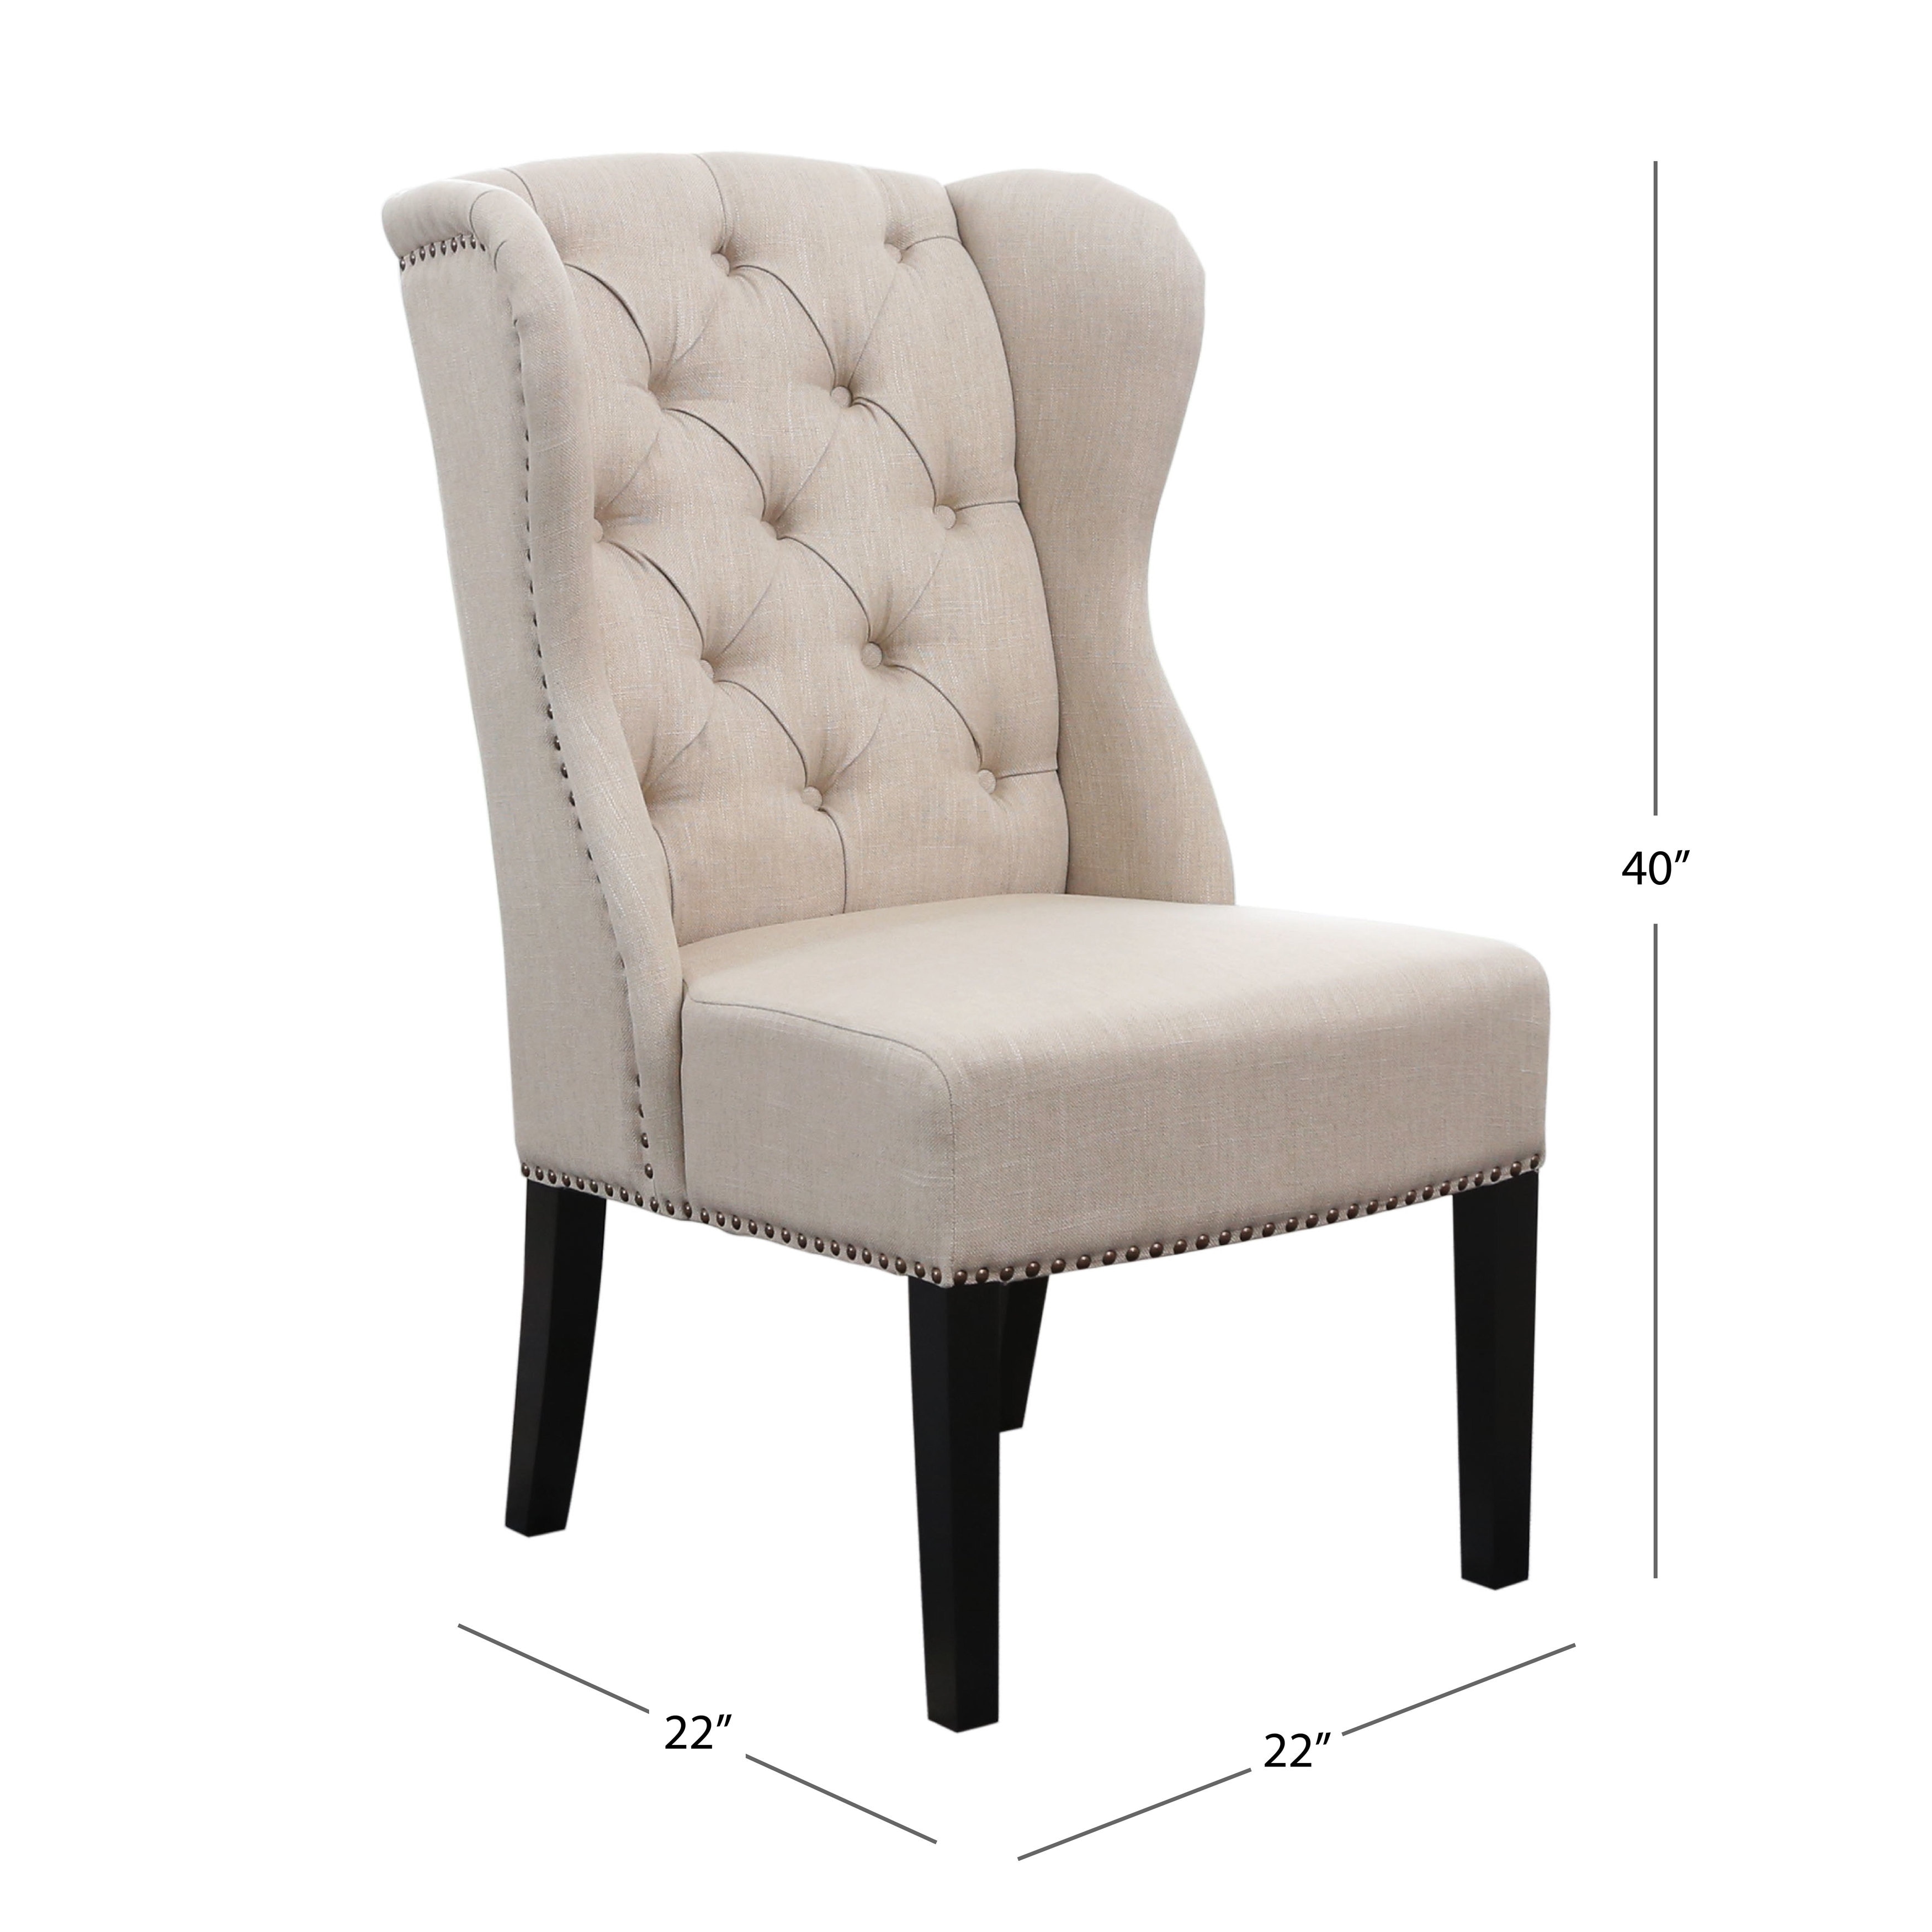 Abbyson Sierra Tufted Cream Linen Wingback Dining Chair Overstock 9554849